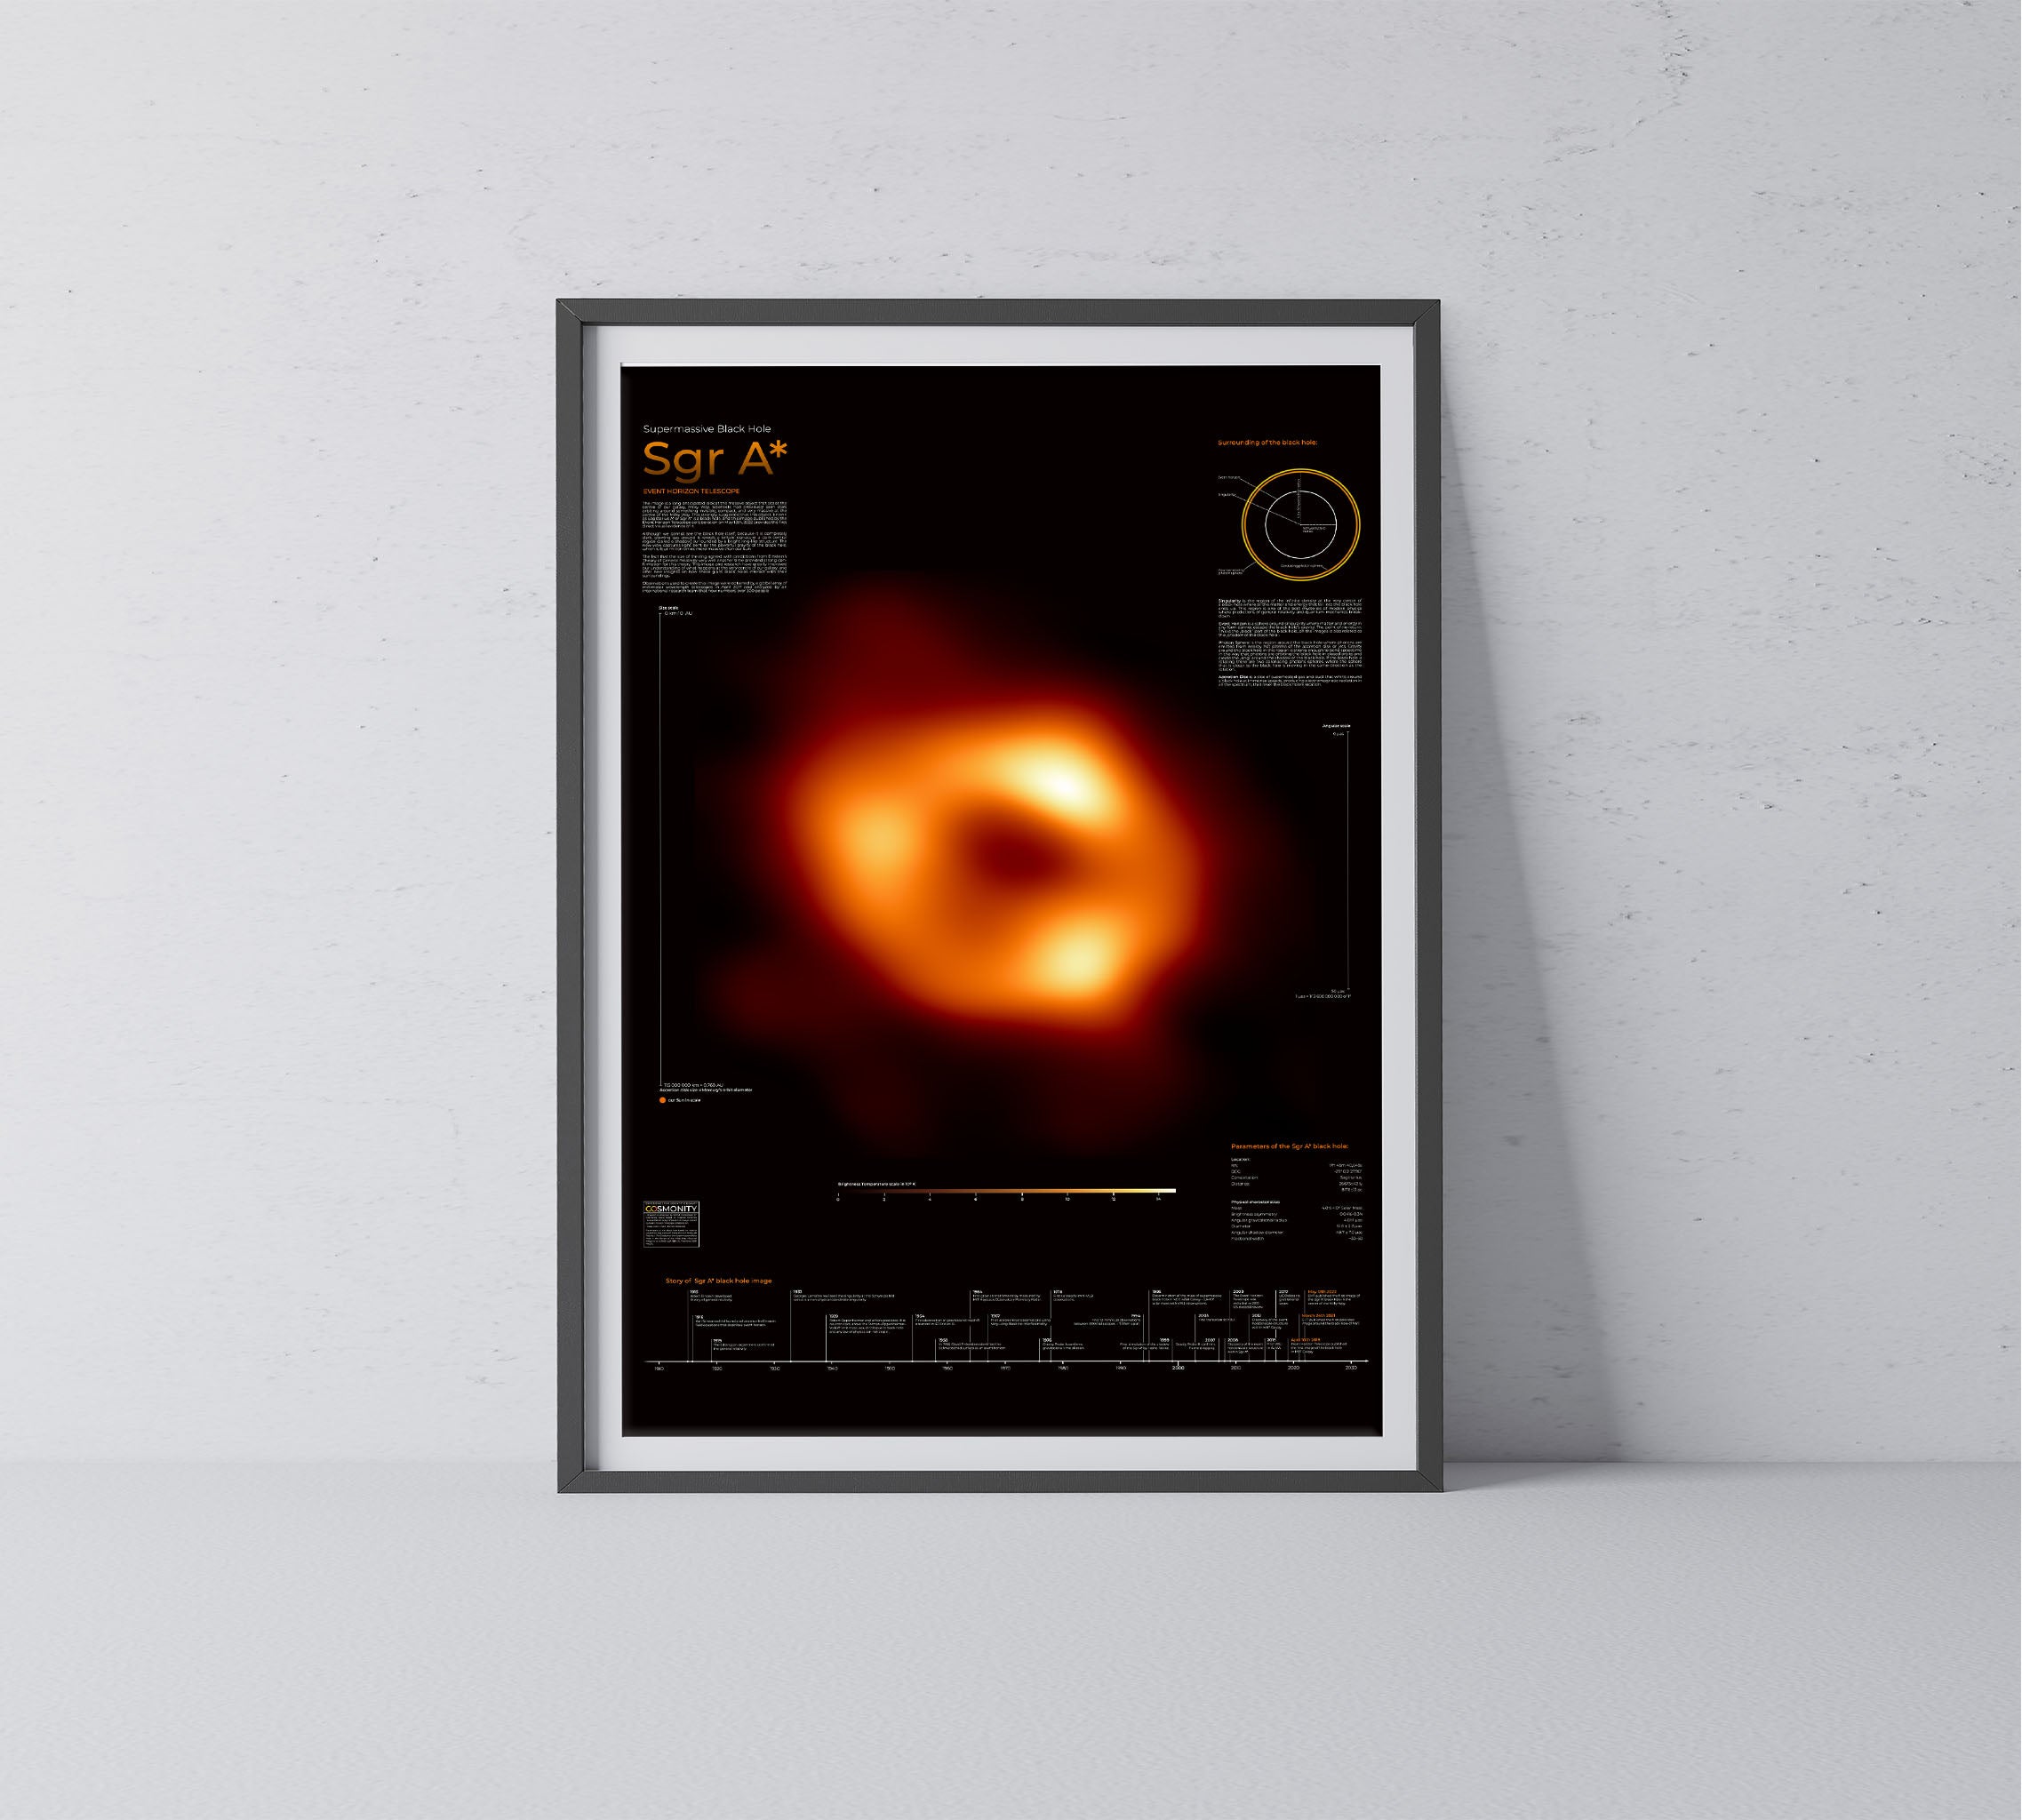 Sgr A* Black Hole Infographic